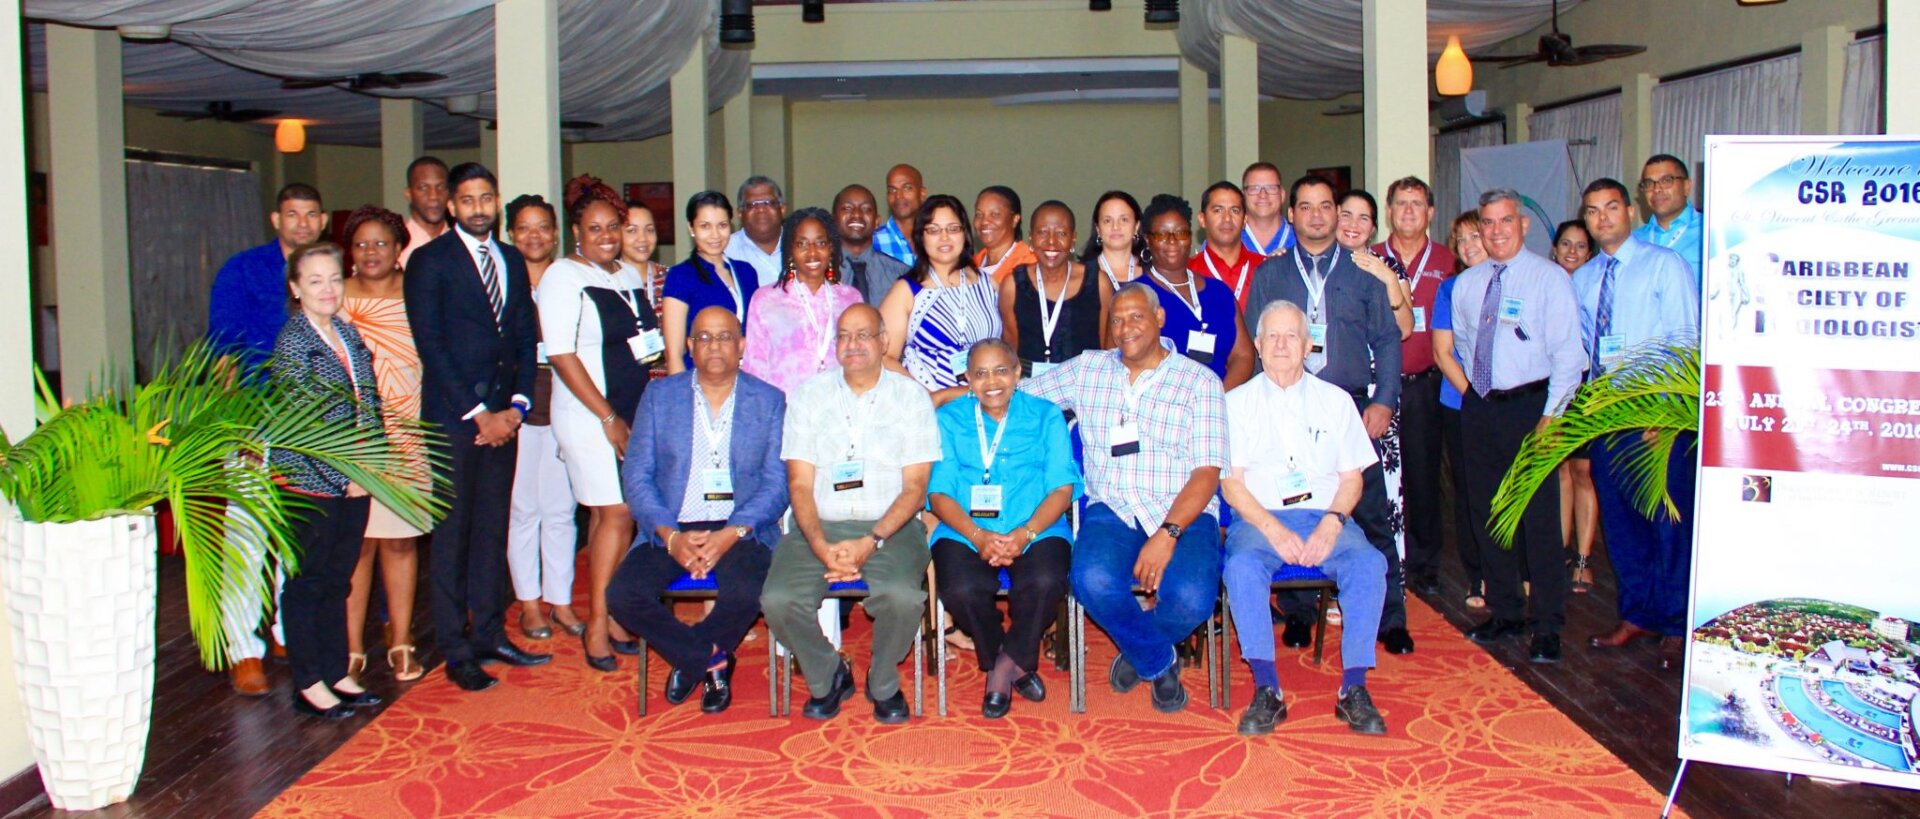 Front row: from left -- Dr. A. Ameeral (Trinidad) Dr. P. Maharaj (Trinidad) Dr. R.E. Ambrose (SVG), Dr. J. Jessurun (Suriname/Curaçao,) Dr. N. Moule (Jamaica).